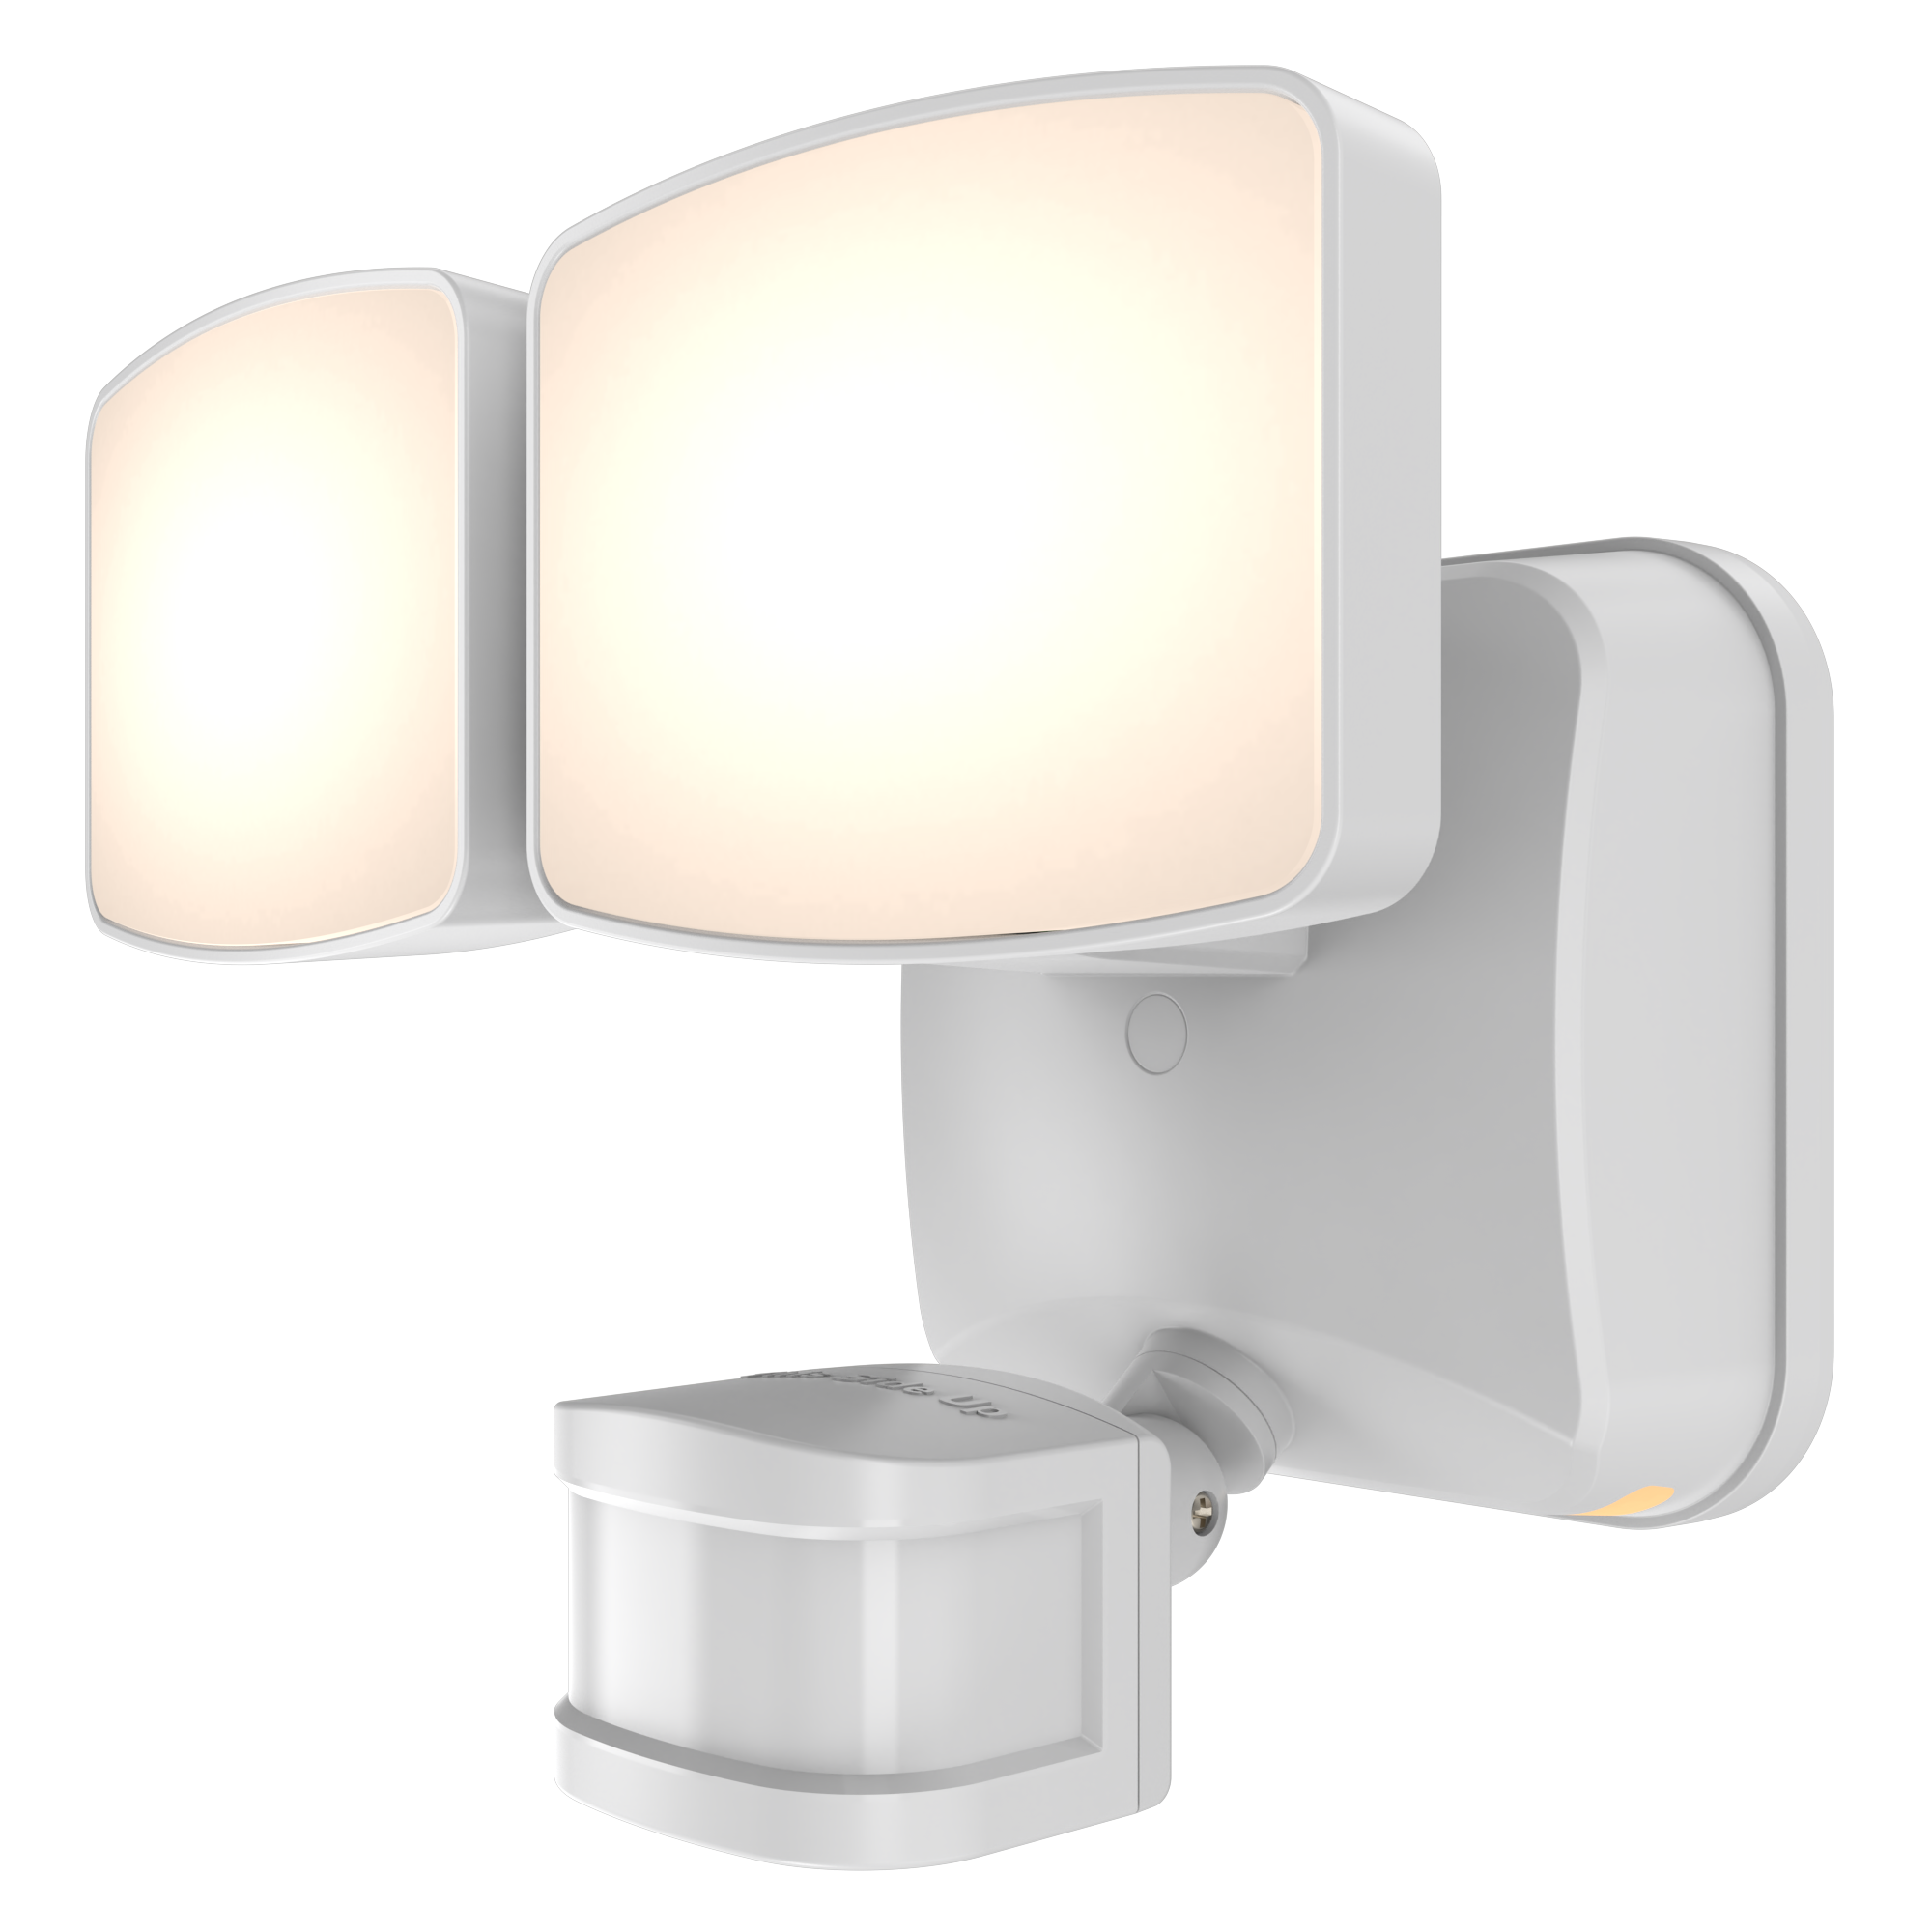 Enbrighten Outdoor Single-Head Motion-Sensing WiFi LED Security Light, White